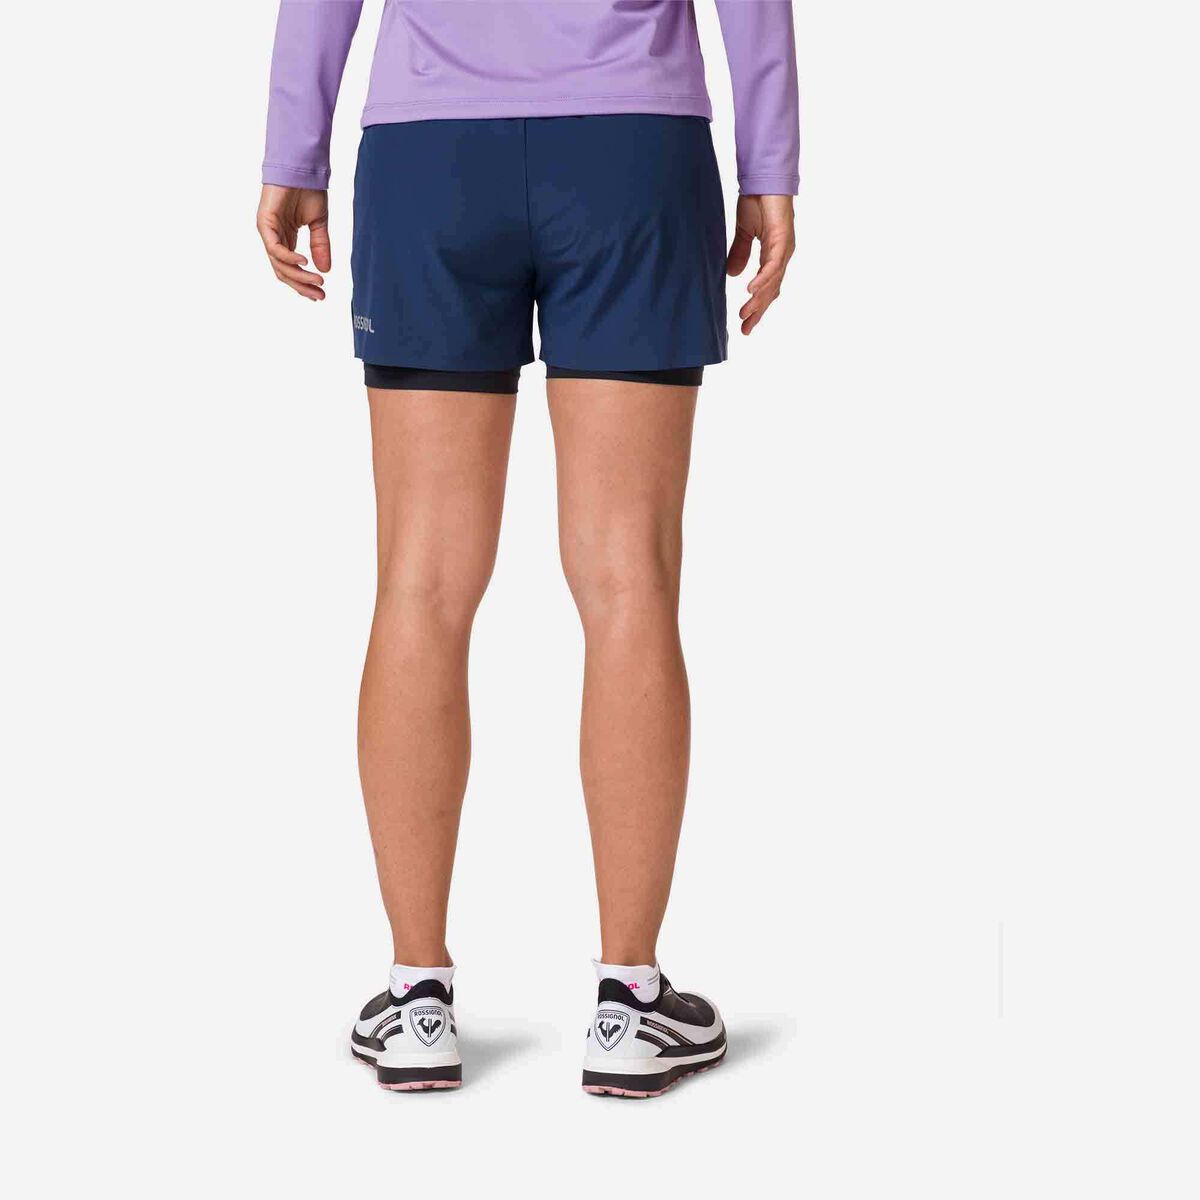 Women's trail running shorts